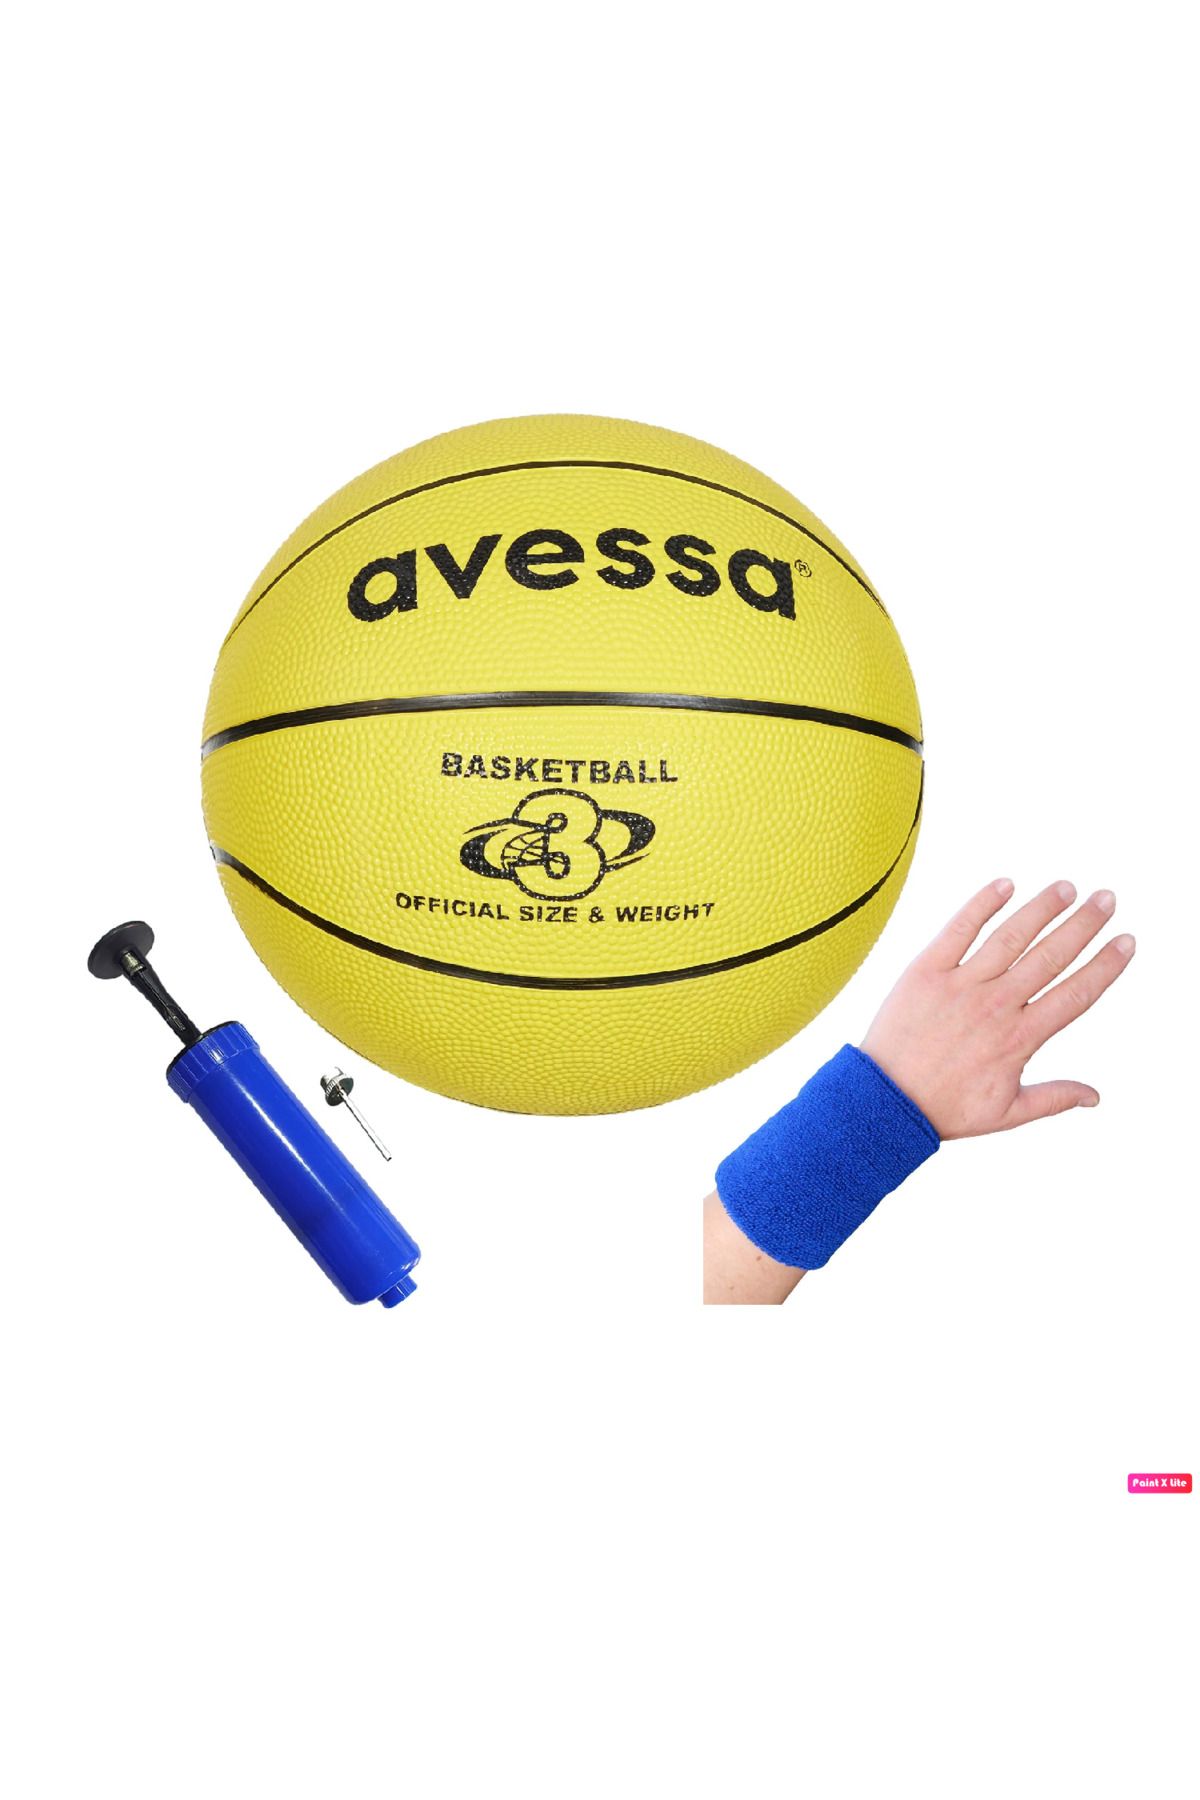 Avessa Brc-3 Basket Topu Unisex Kauçuk Soft Touch Basketbol Topu 280 gr No 3 + Pompa + Havlu Bileklik